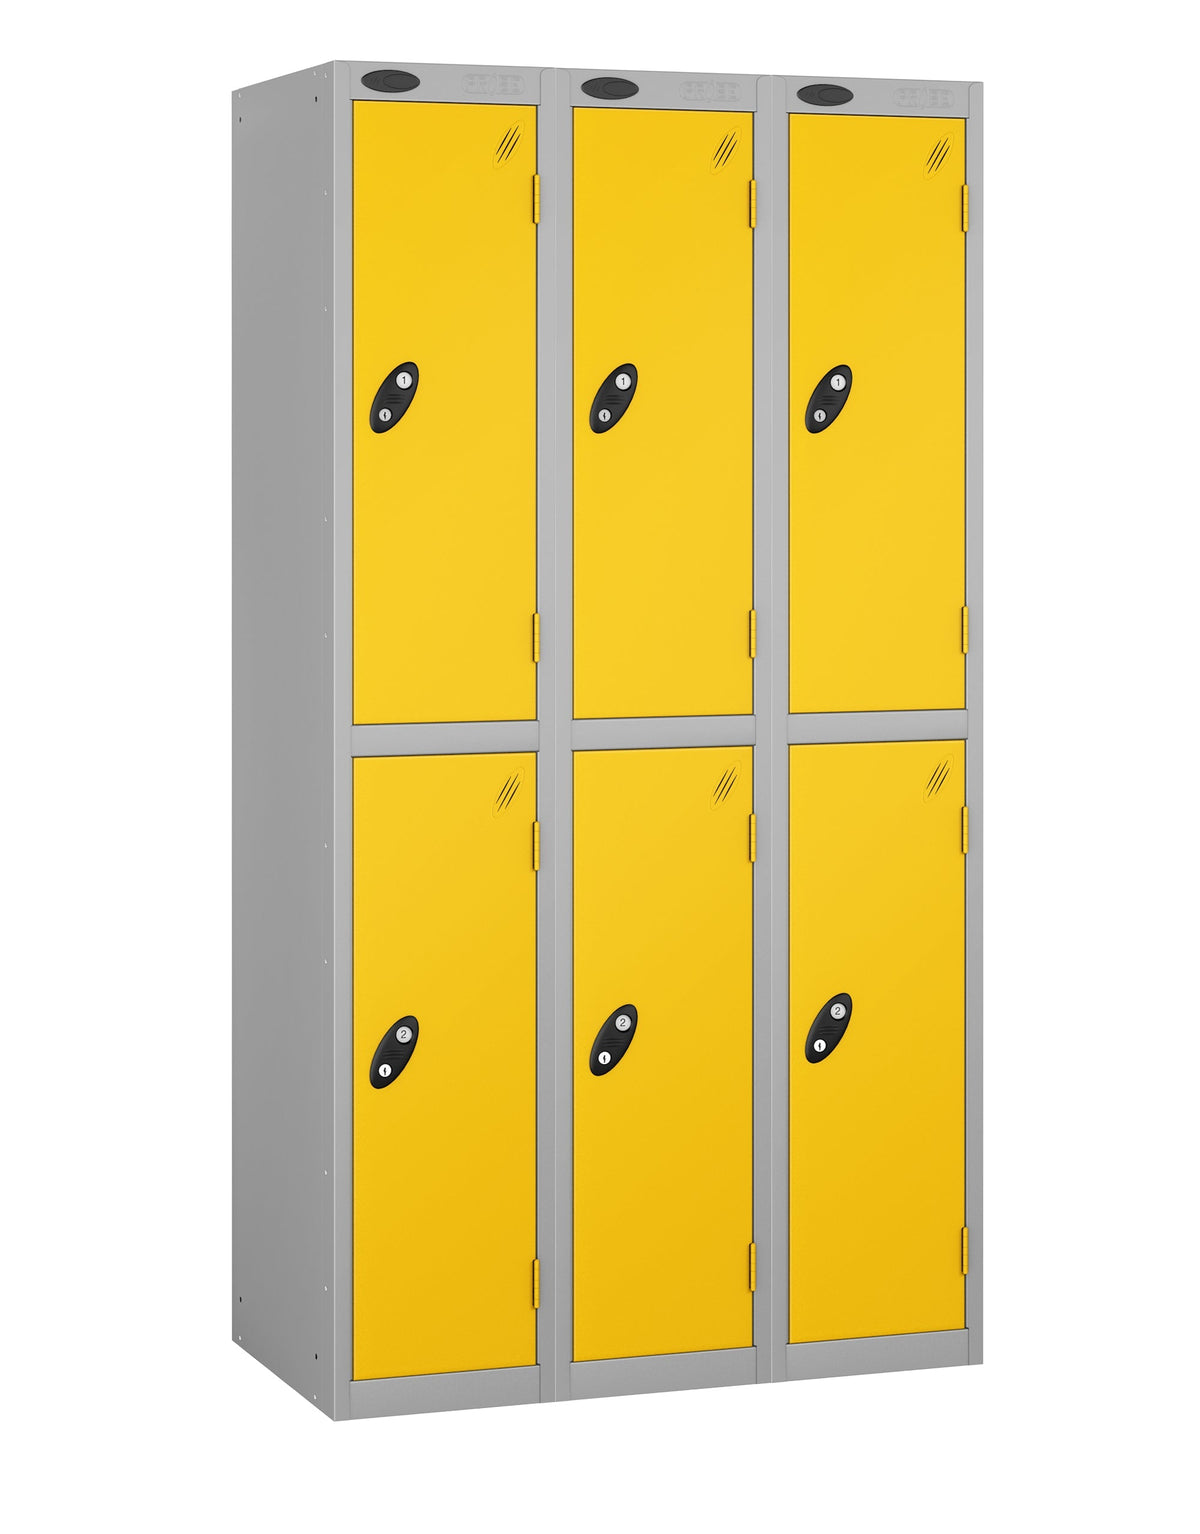 PROBEBOX STANDARD 3 NEST STEEL LOCKERS - ROYAL YELLOW 2 DOOR Storage Lockers > Lockers > Cabinets > Storage > Probe > One Stop For Safety   